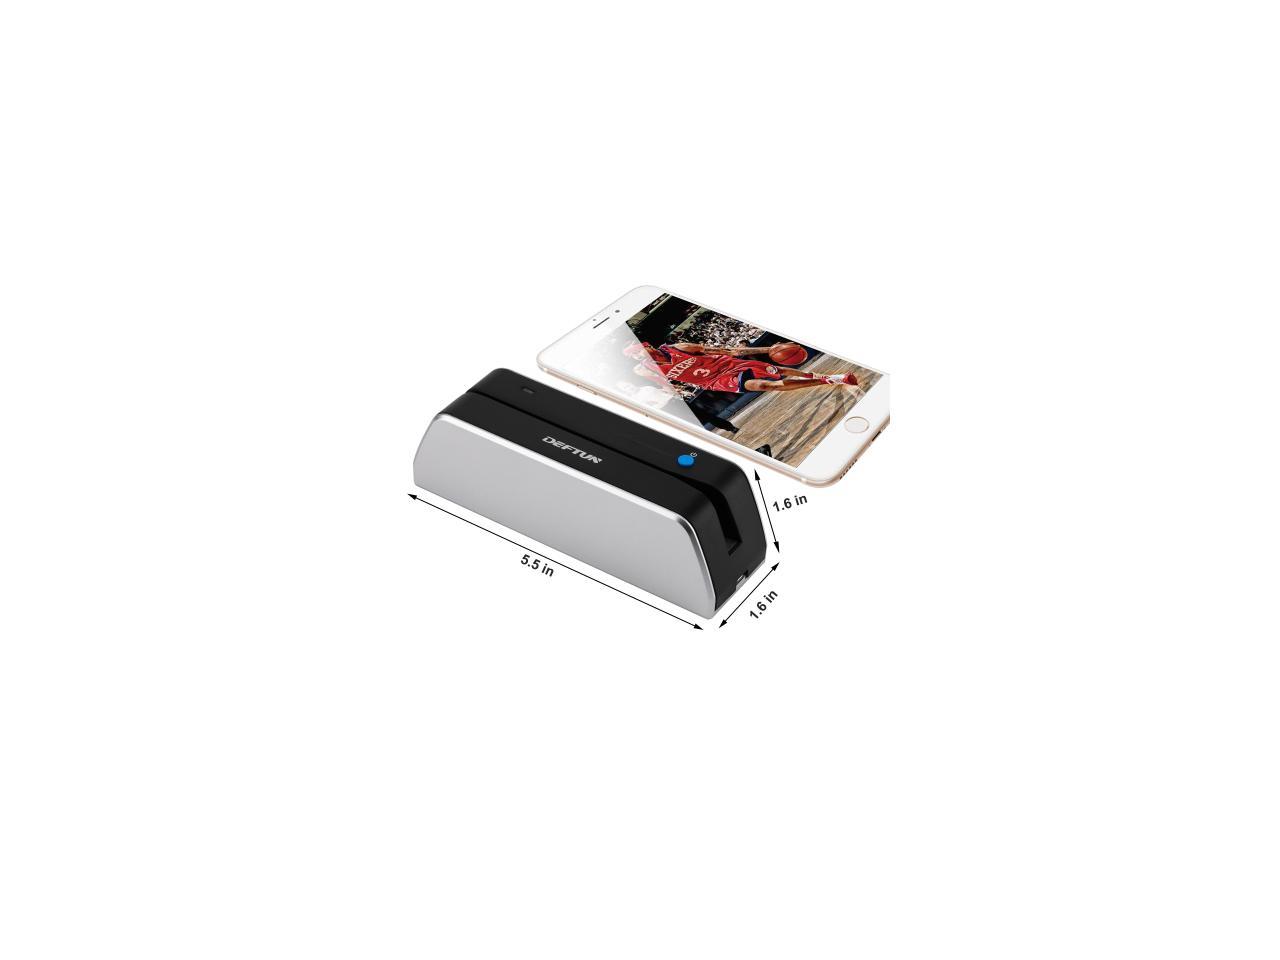 Deftun Msr X6bt Bluetooth Magnetic Credit Card Reader Writer Encoder Stripe Msr206 4757